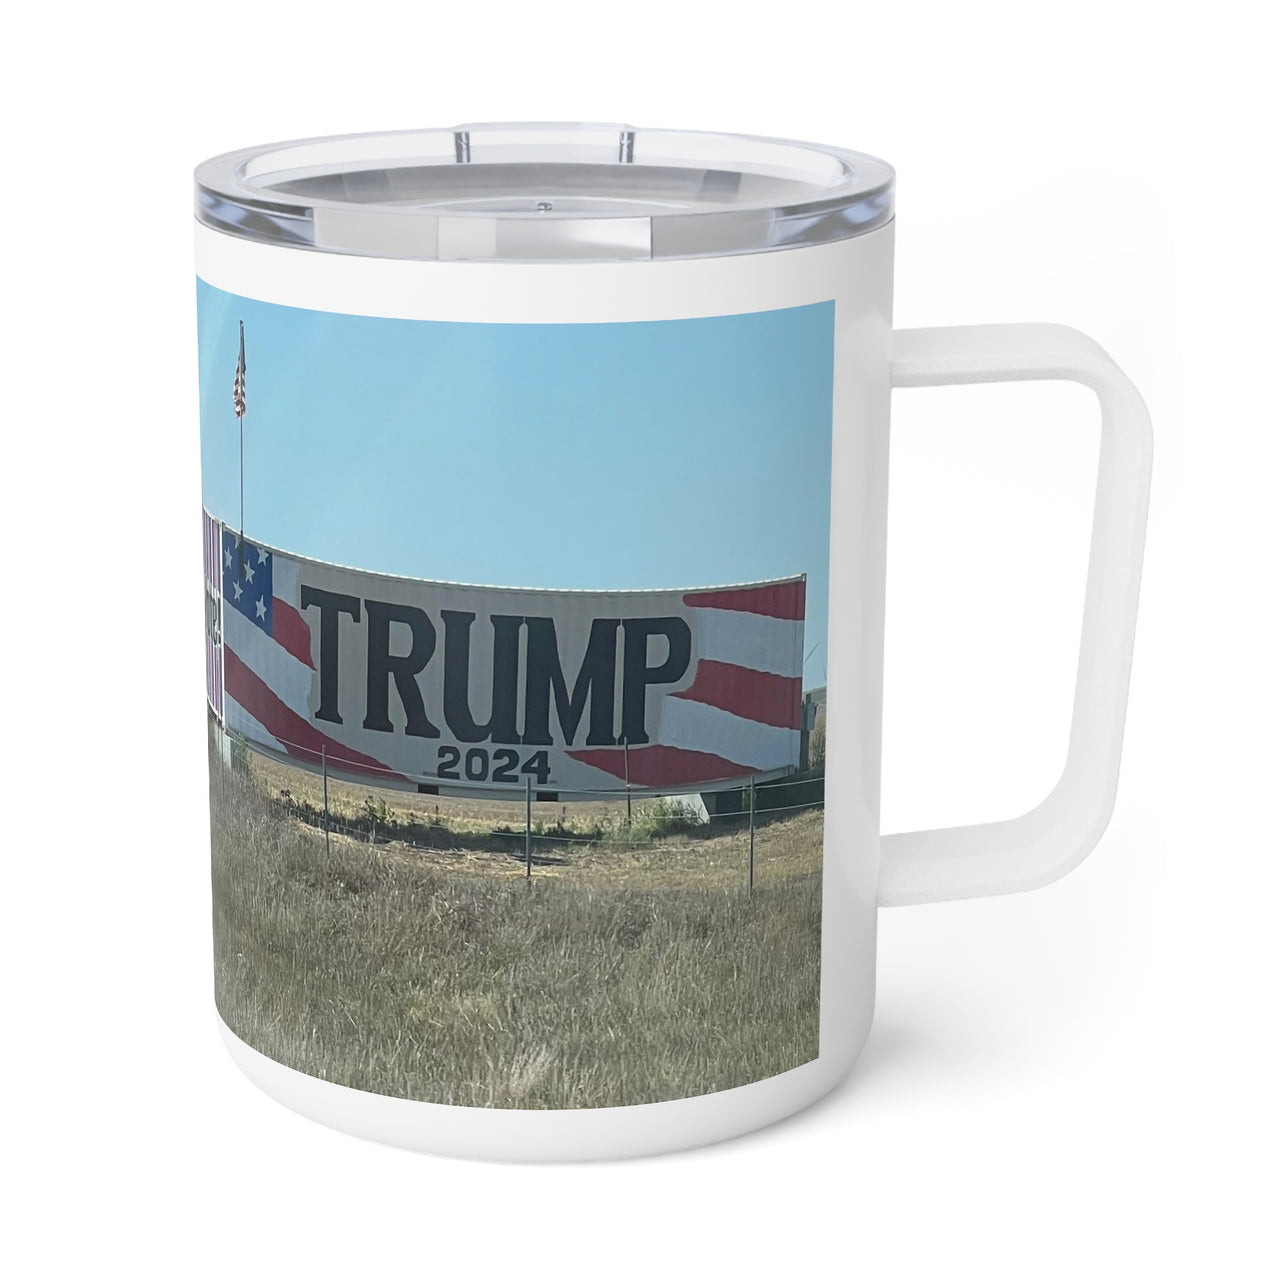 Trump 2024 Insulated Coffee Mug